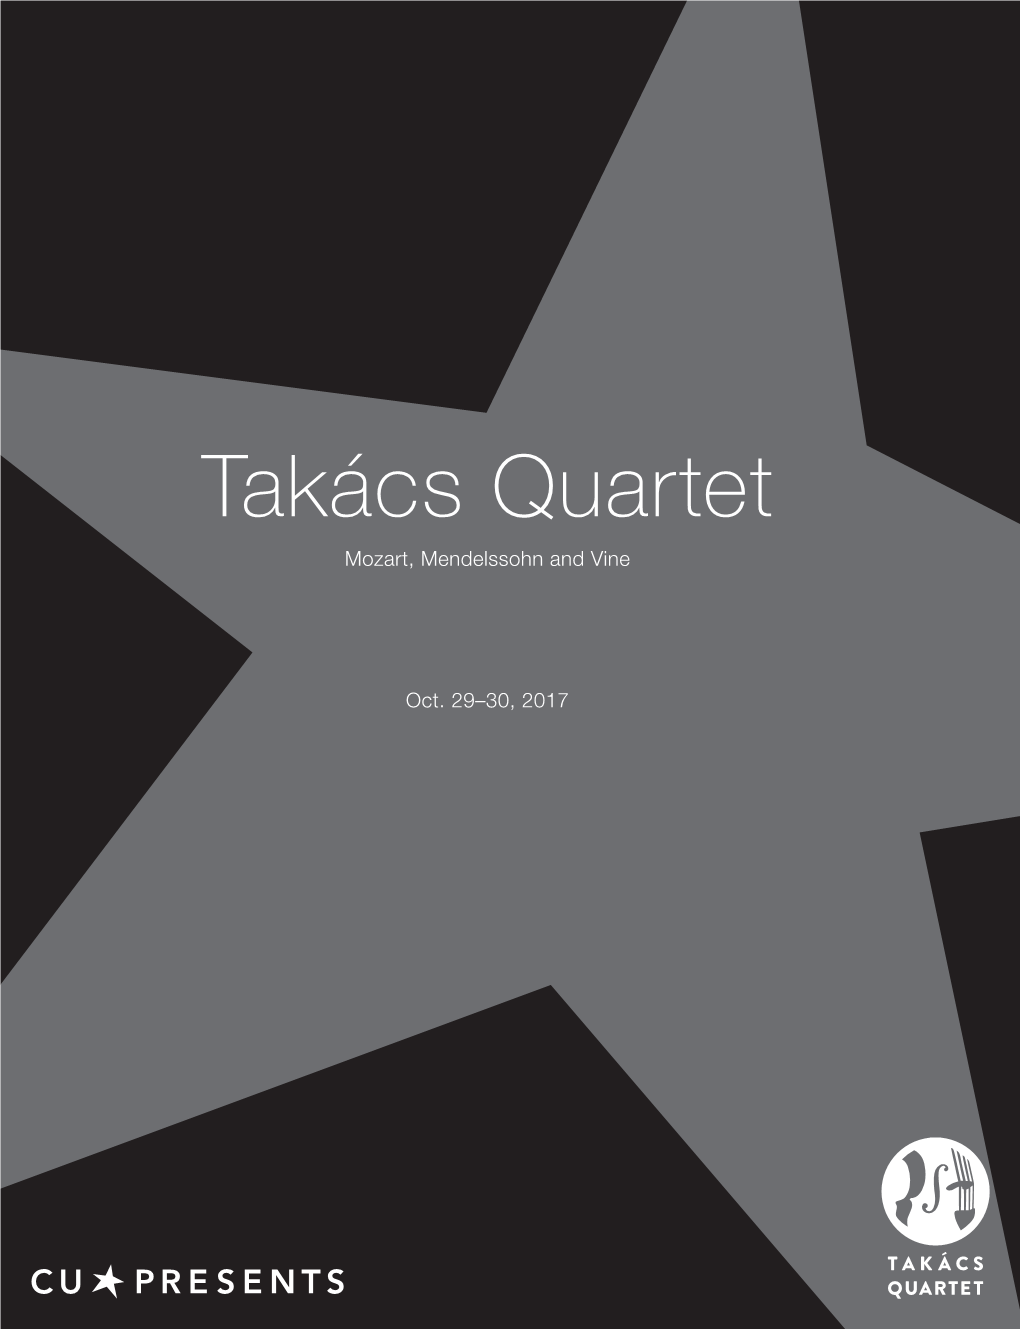 October 29 and 30 Takacs Quartet